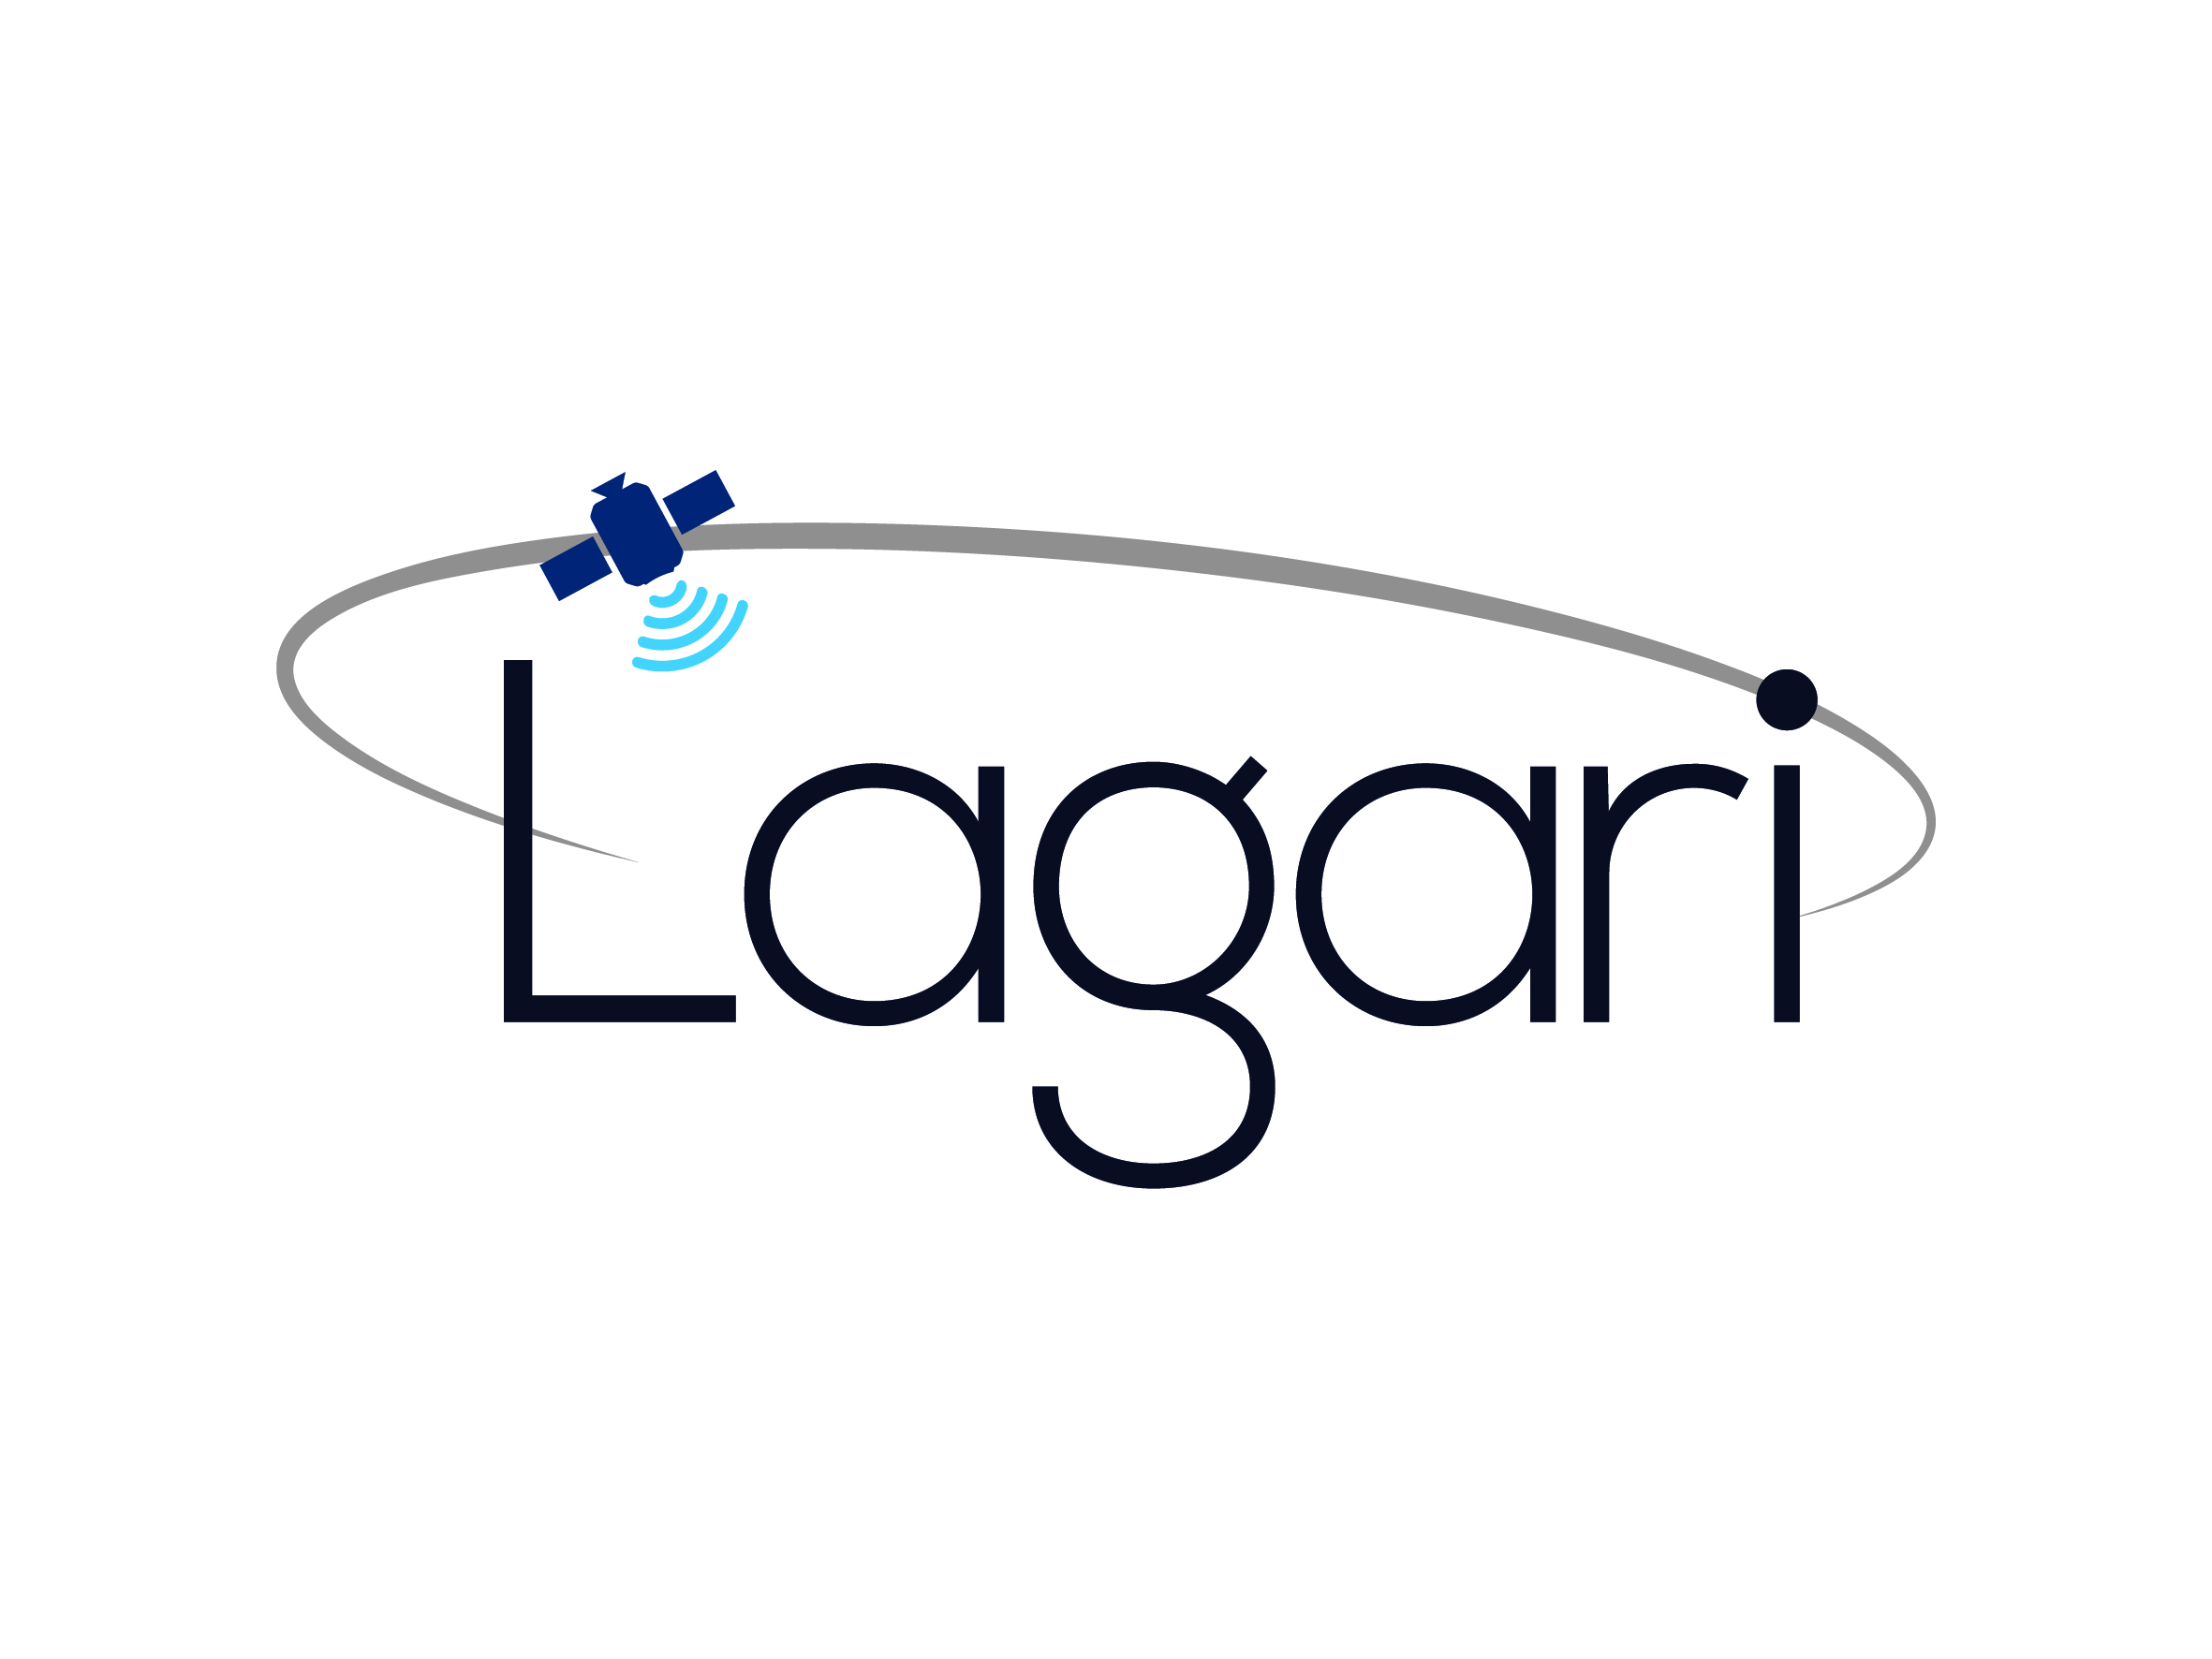 LAGARI Logotype 01 020118 01